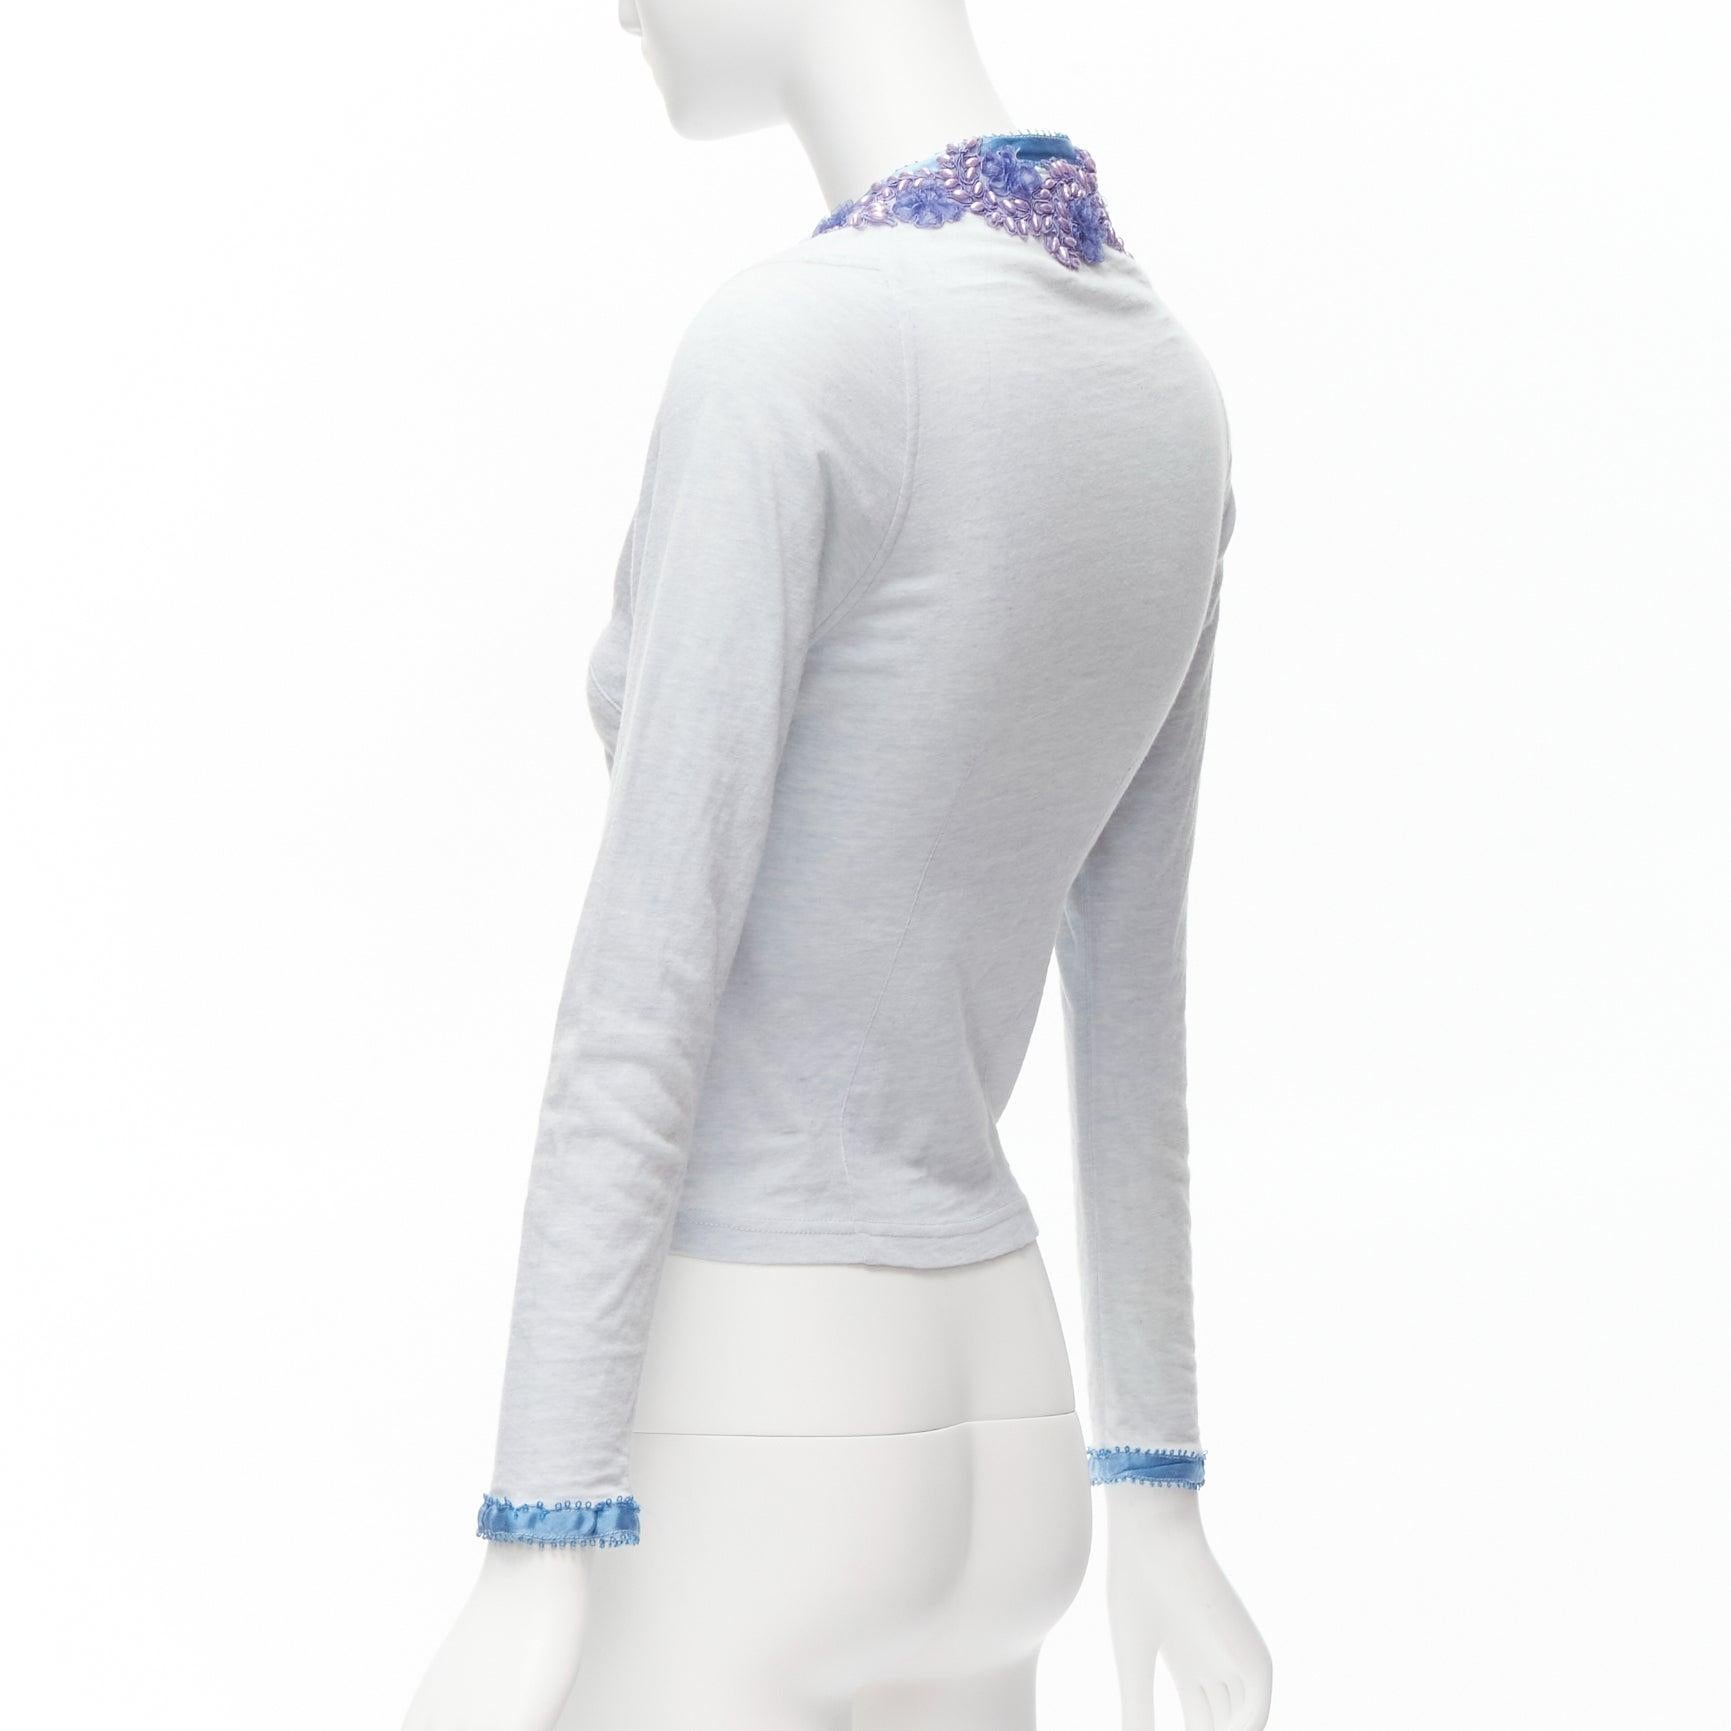 VOYAGE INVEST IN THE ORIGINAL LONDON embellishment trim cotton blend cardigan L For Sale 2